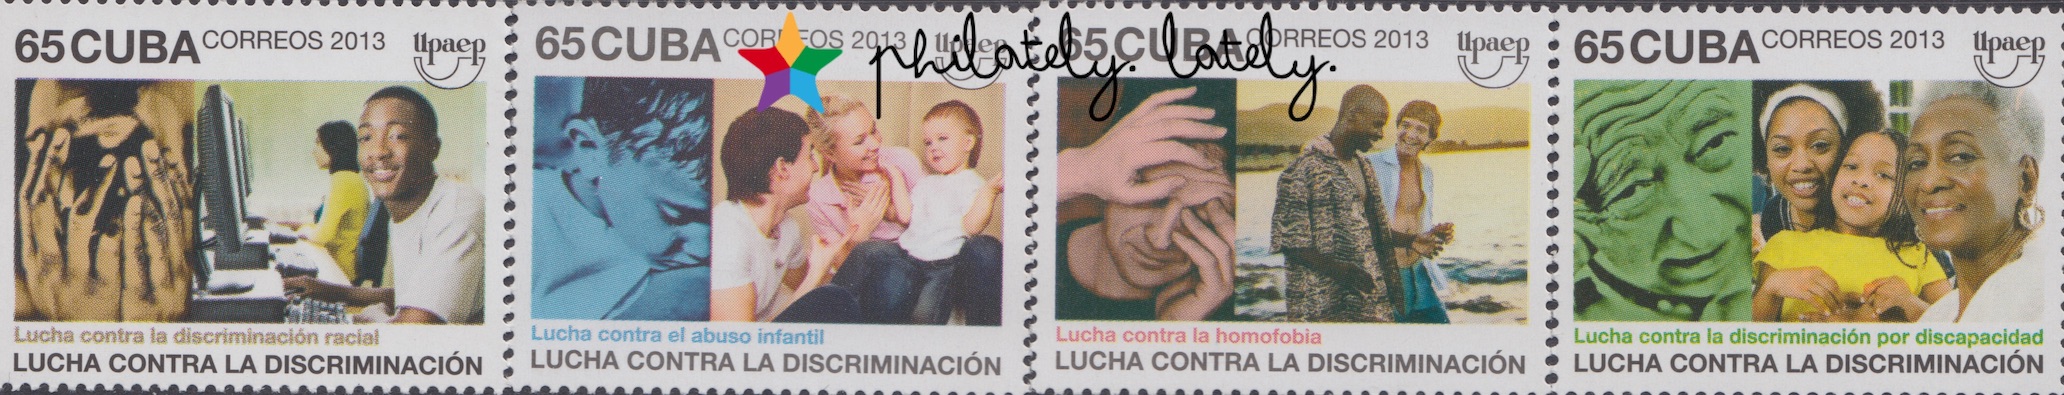 010_Cuba_LGBT_Stamps.jpg